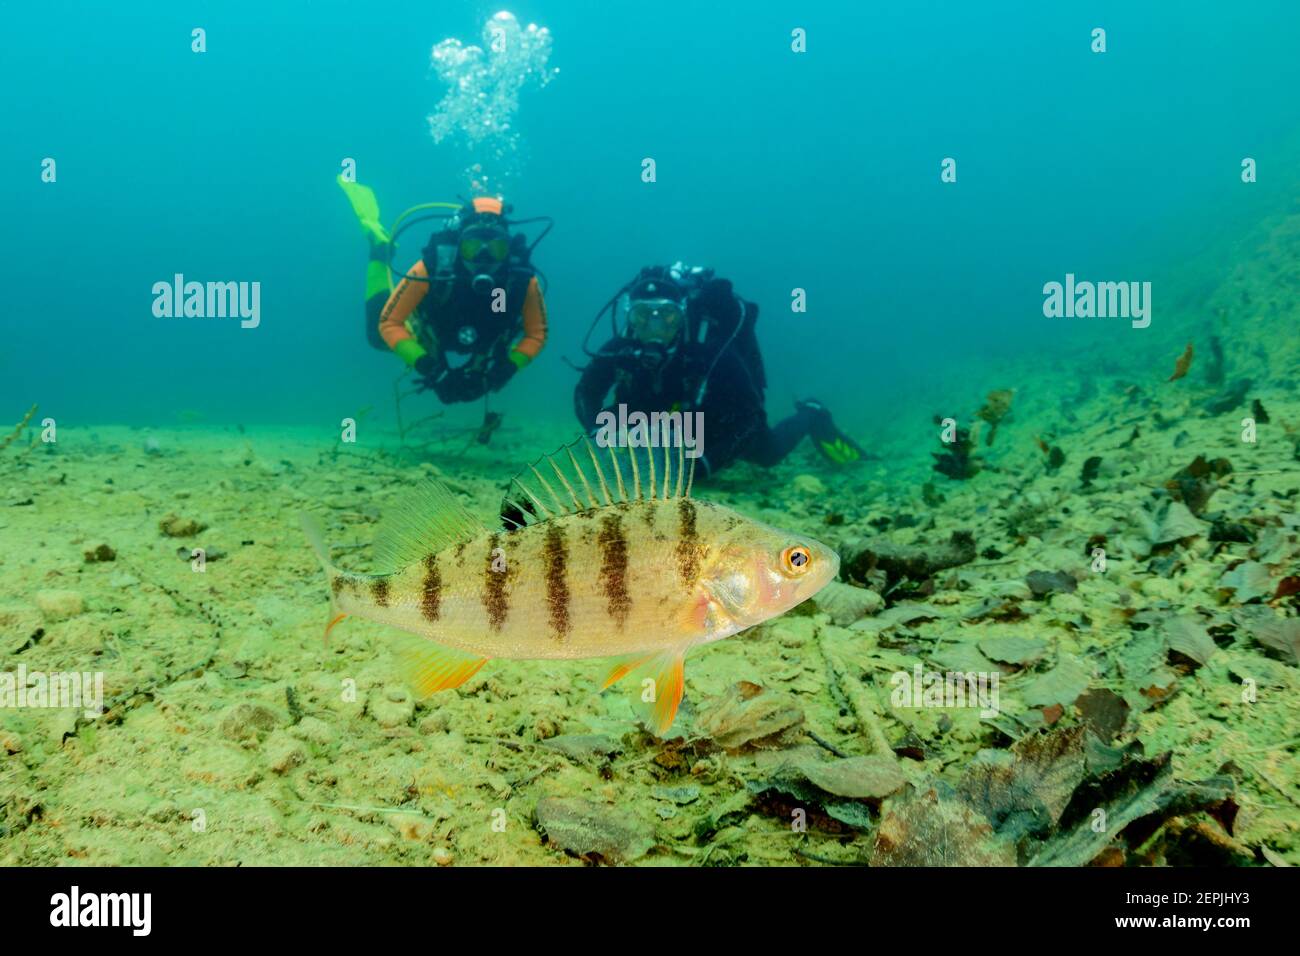 Perca fluviatilis, European perch and scuba diver, Gosau, Gosausee, Lake Gosau, Austria Stock Photo